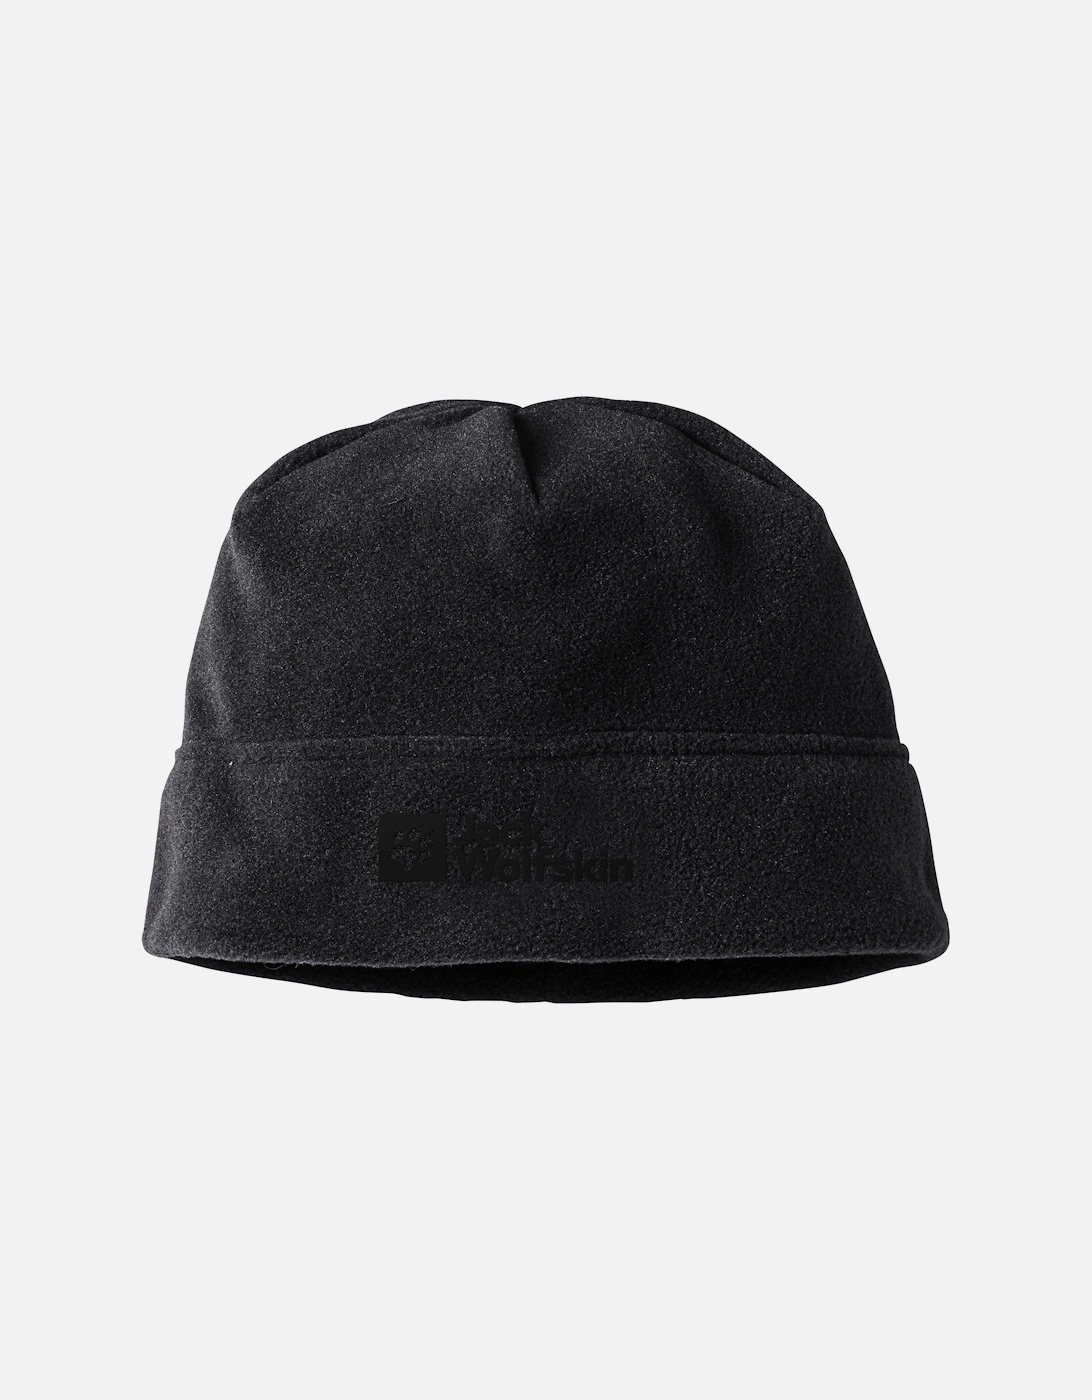 Mens Vertigo Fleece Warm Winter Beanie Hat - Black